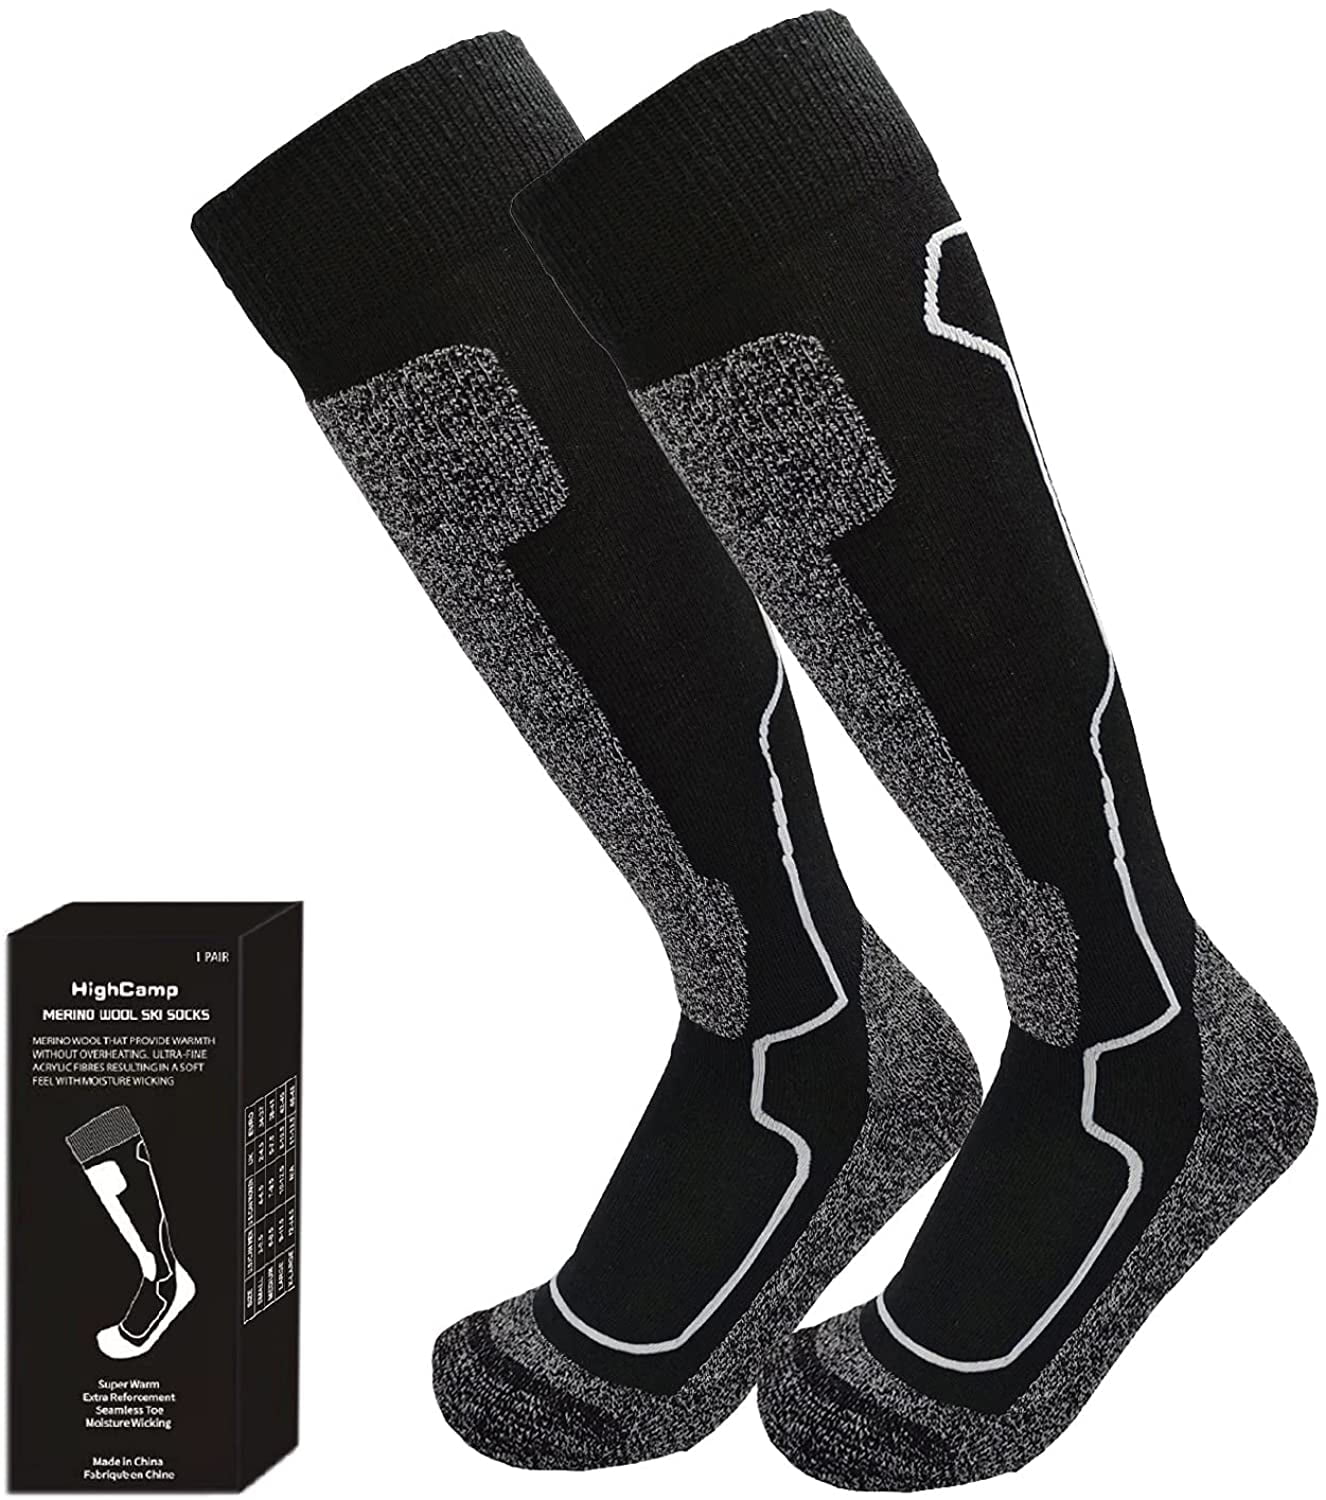 Merino Wool Ski Socks for Snowboarding Cold Weather Snow Winter Warm Knee High 